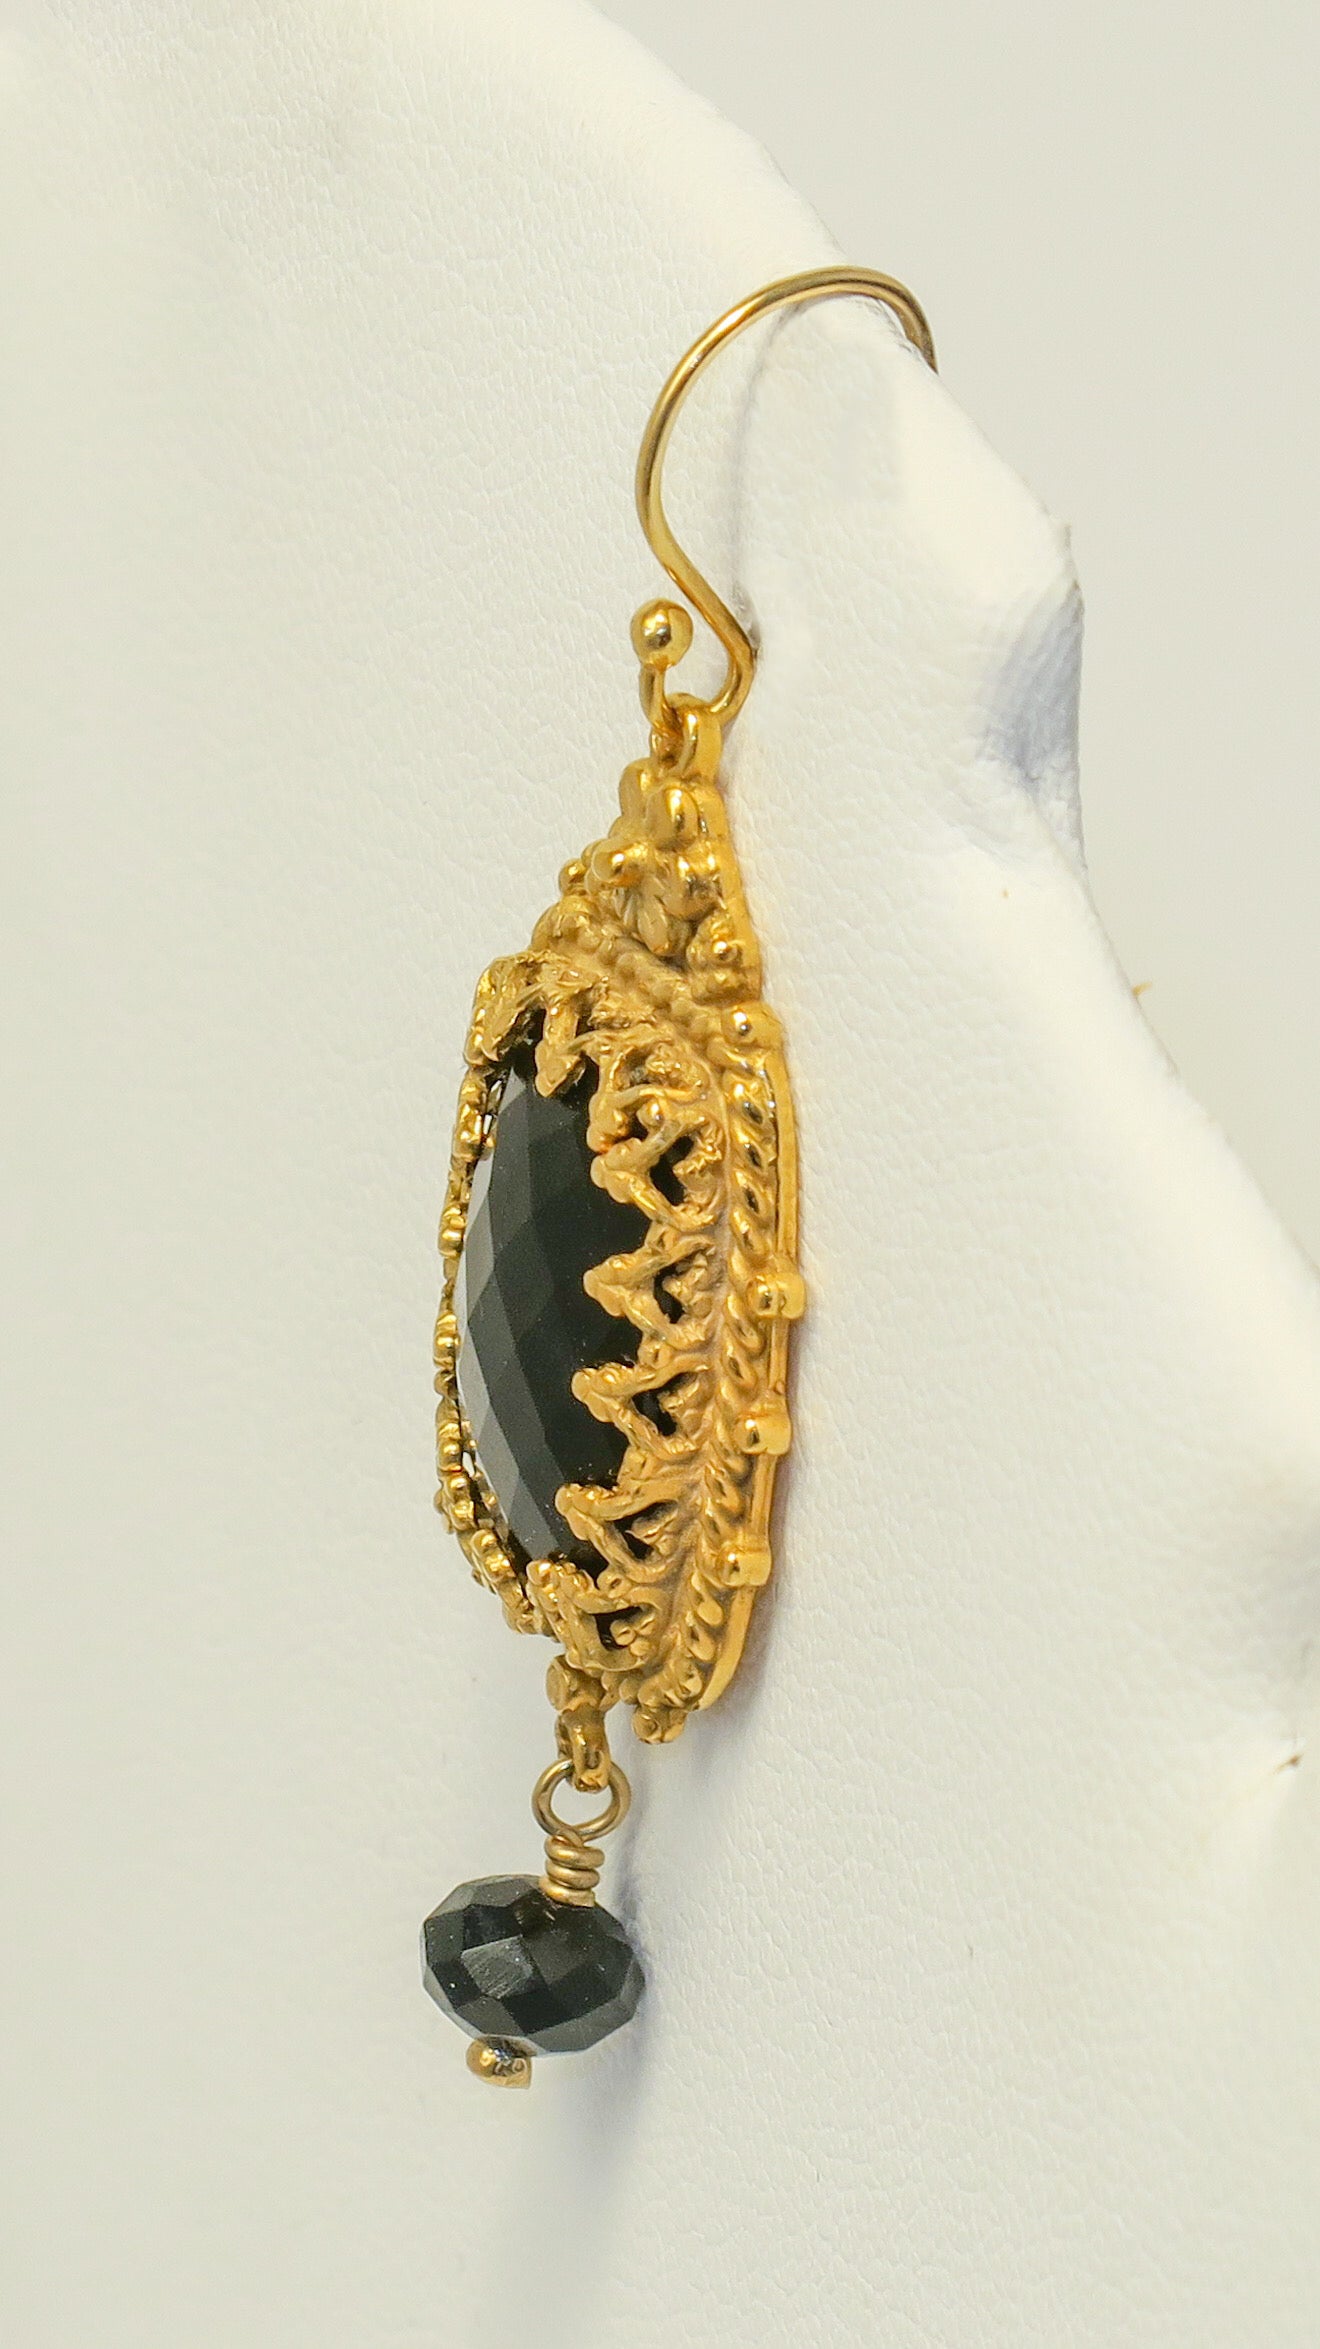 18K Gold Vermeil and Black Onyx Earrings | by Vanessa Mellet